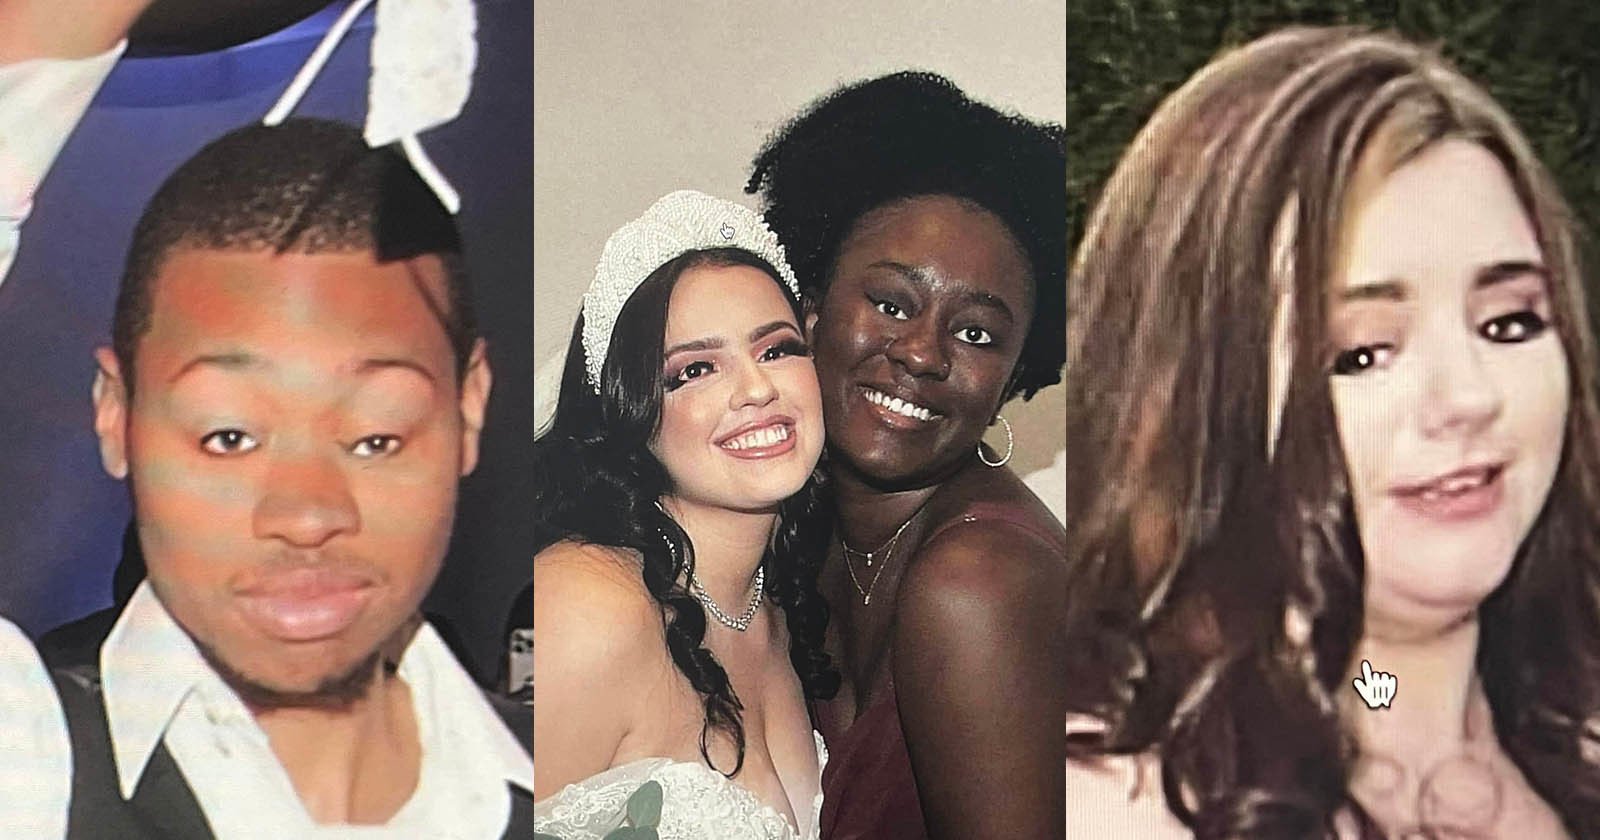 Bride Shocked to Find Crazy Eyes Photoshopped Into Wedding Photos